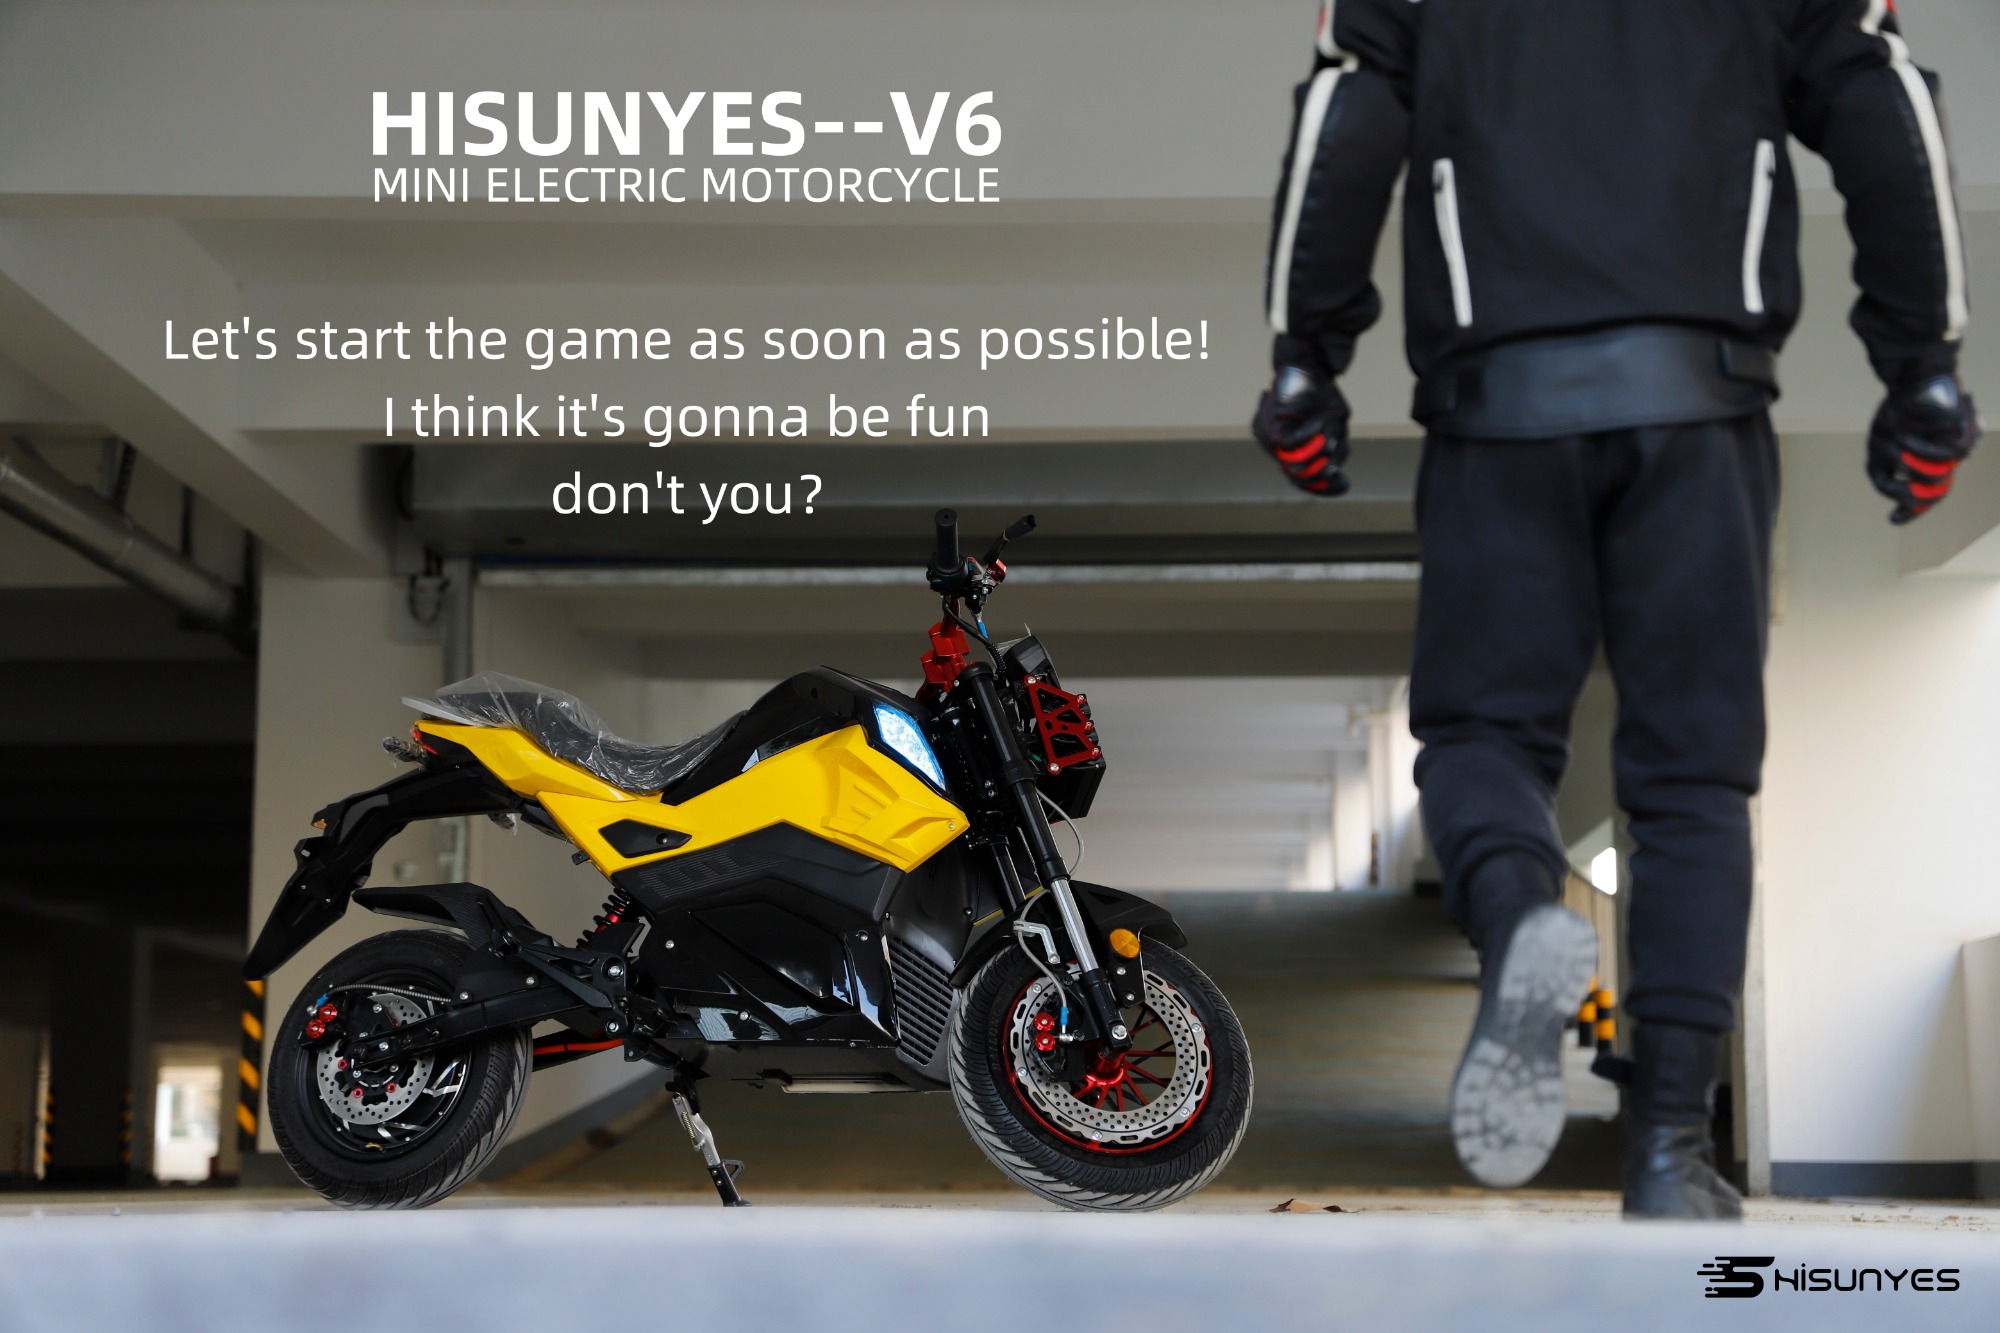 the mini electric motorcycle hisunyes-V6